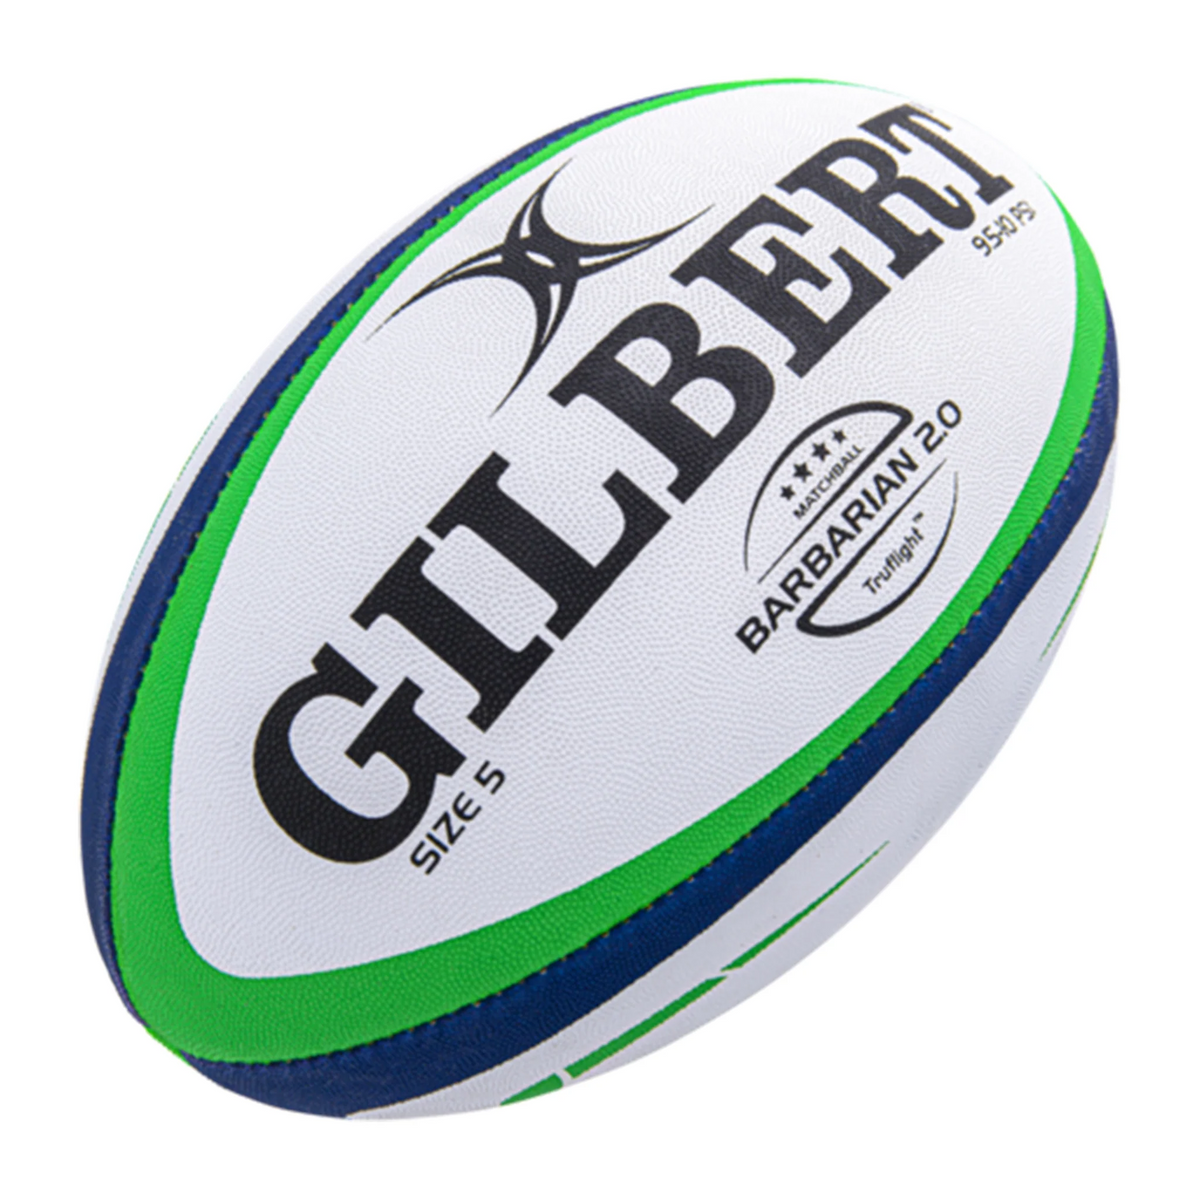 Gilbert Barbarian Rugby Ball 2.0